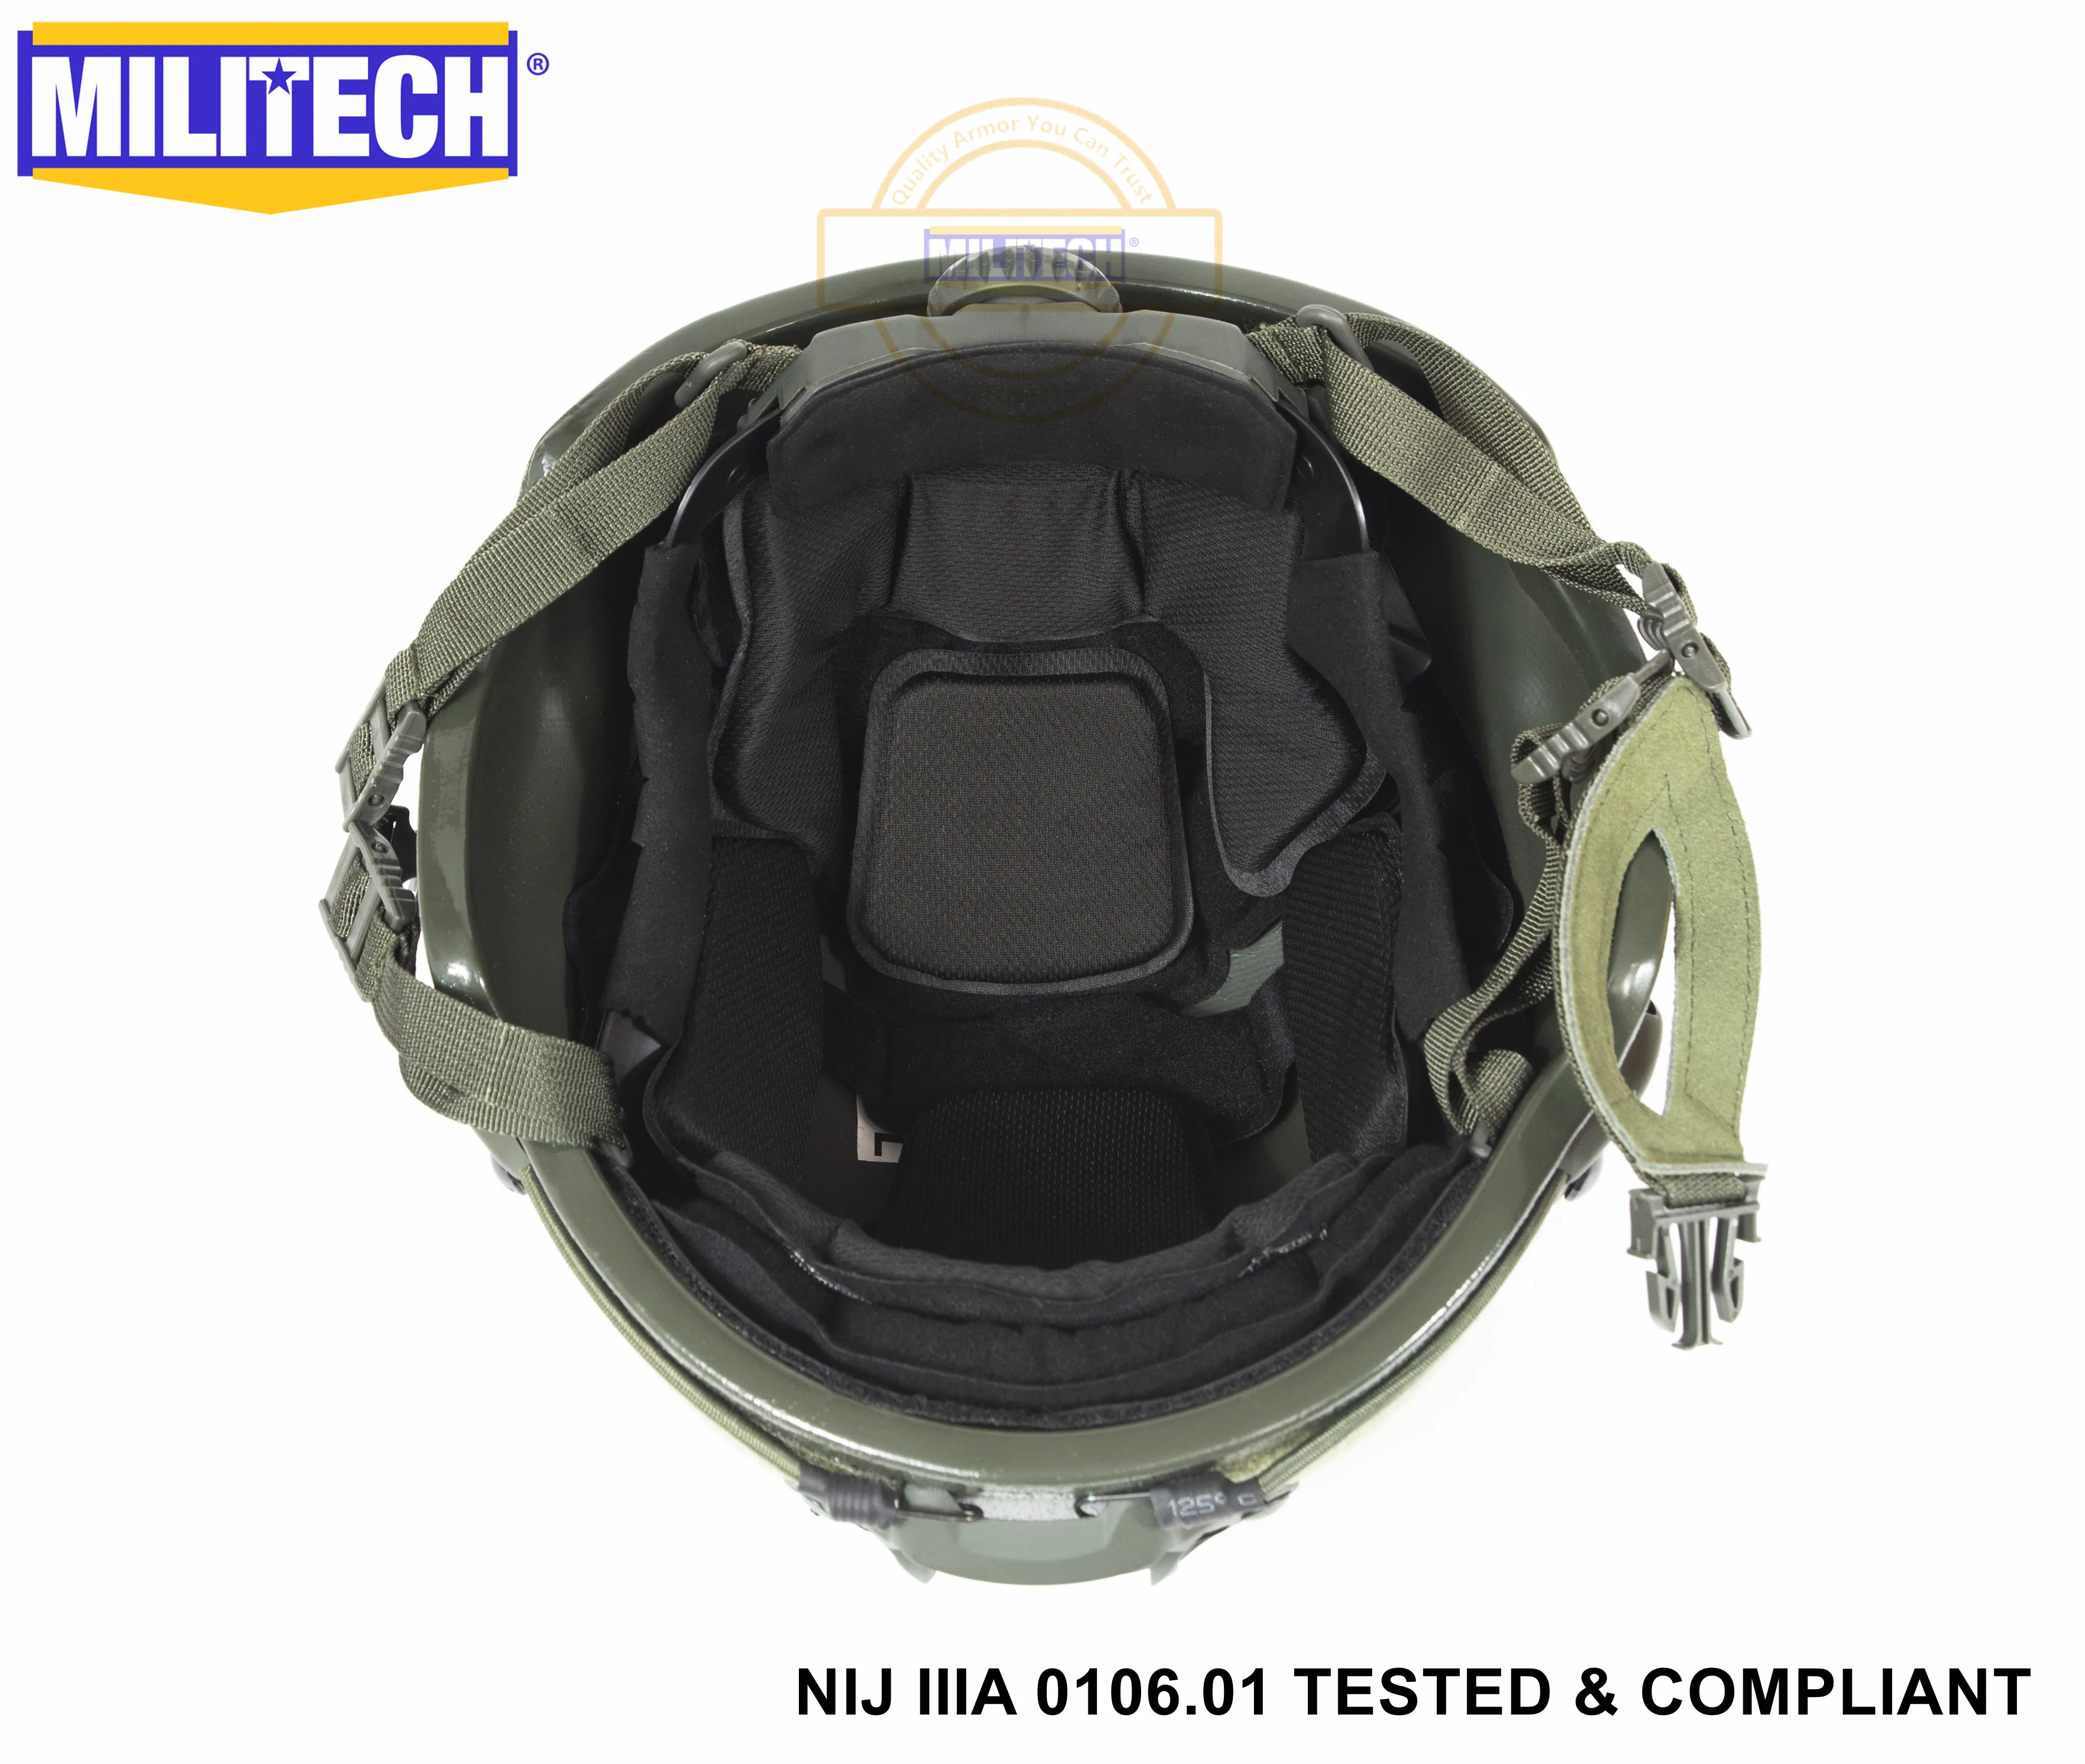 Militech NIJ Level IIIA 3A OD ARC Mid Cut Bulletproof Sentry XP Aramid баллистический шлем с пуленепробиваемый тактический комплект козырька